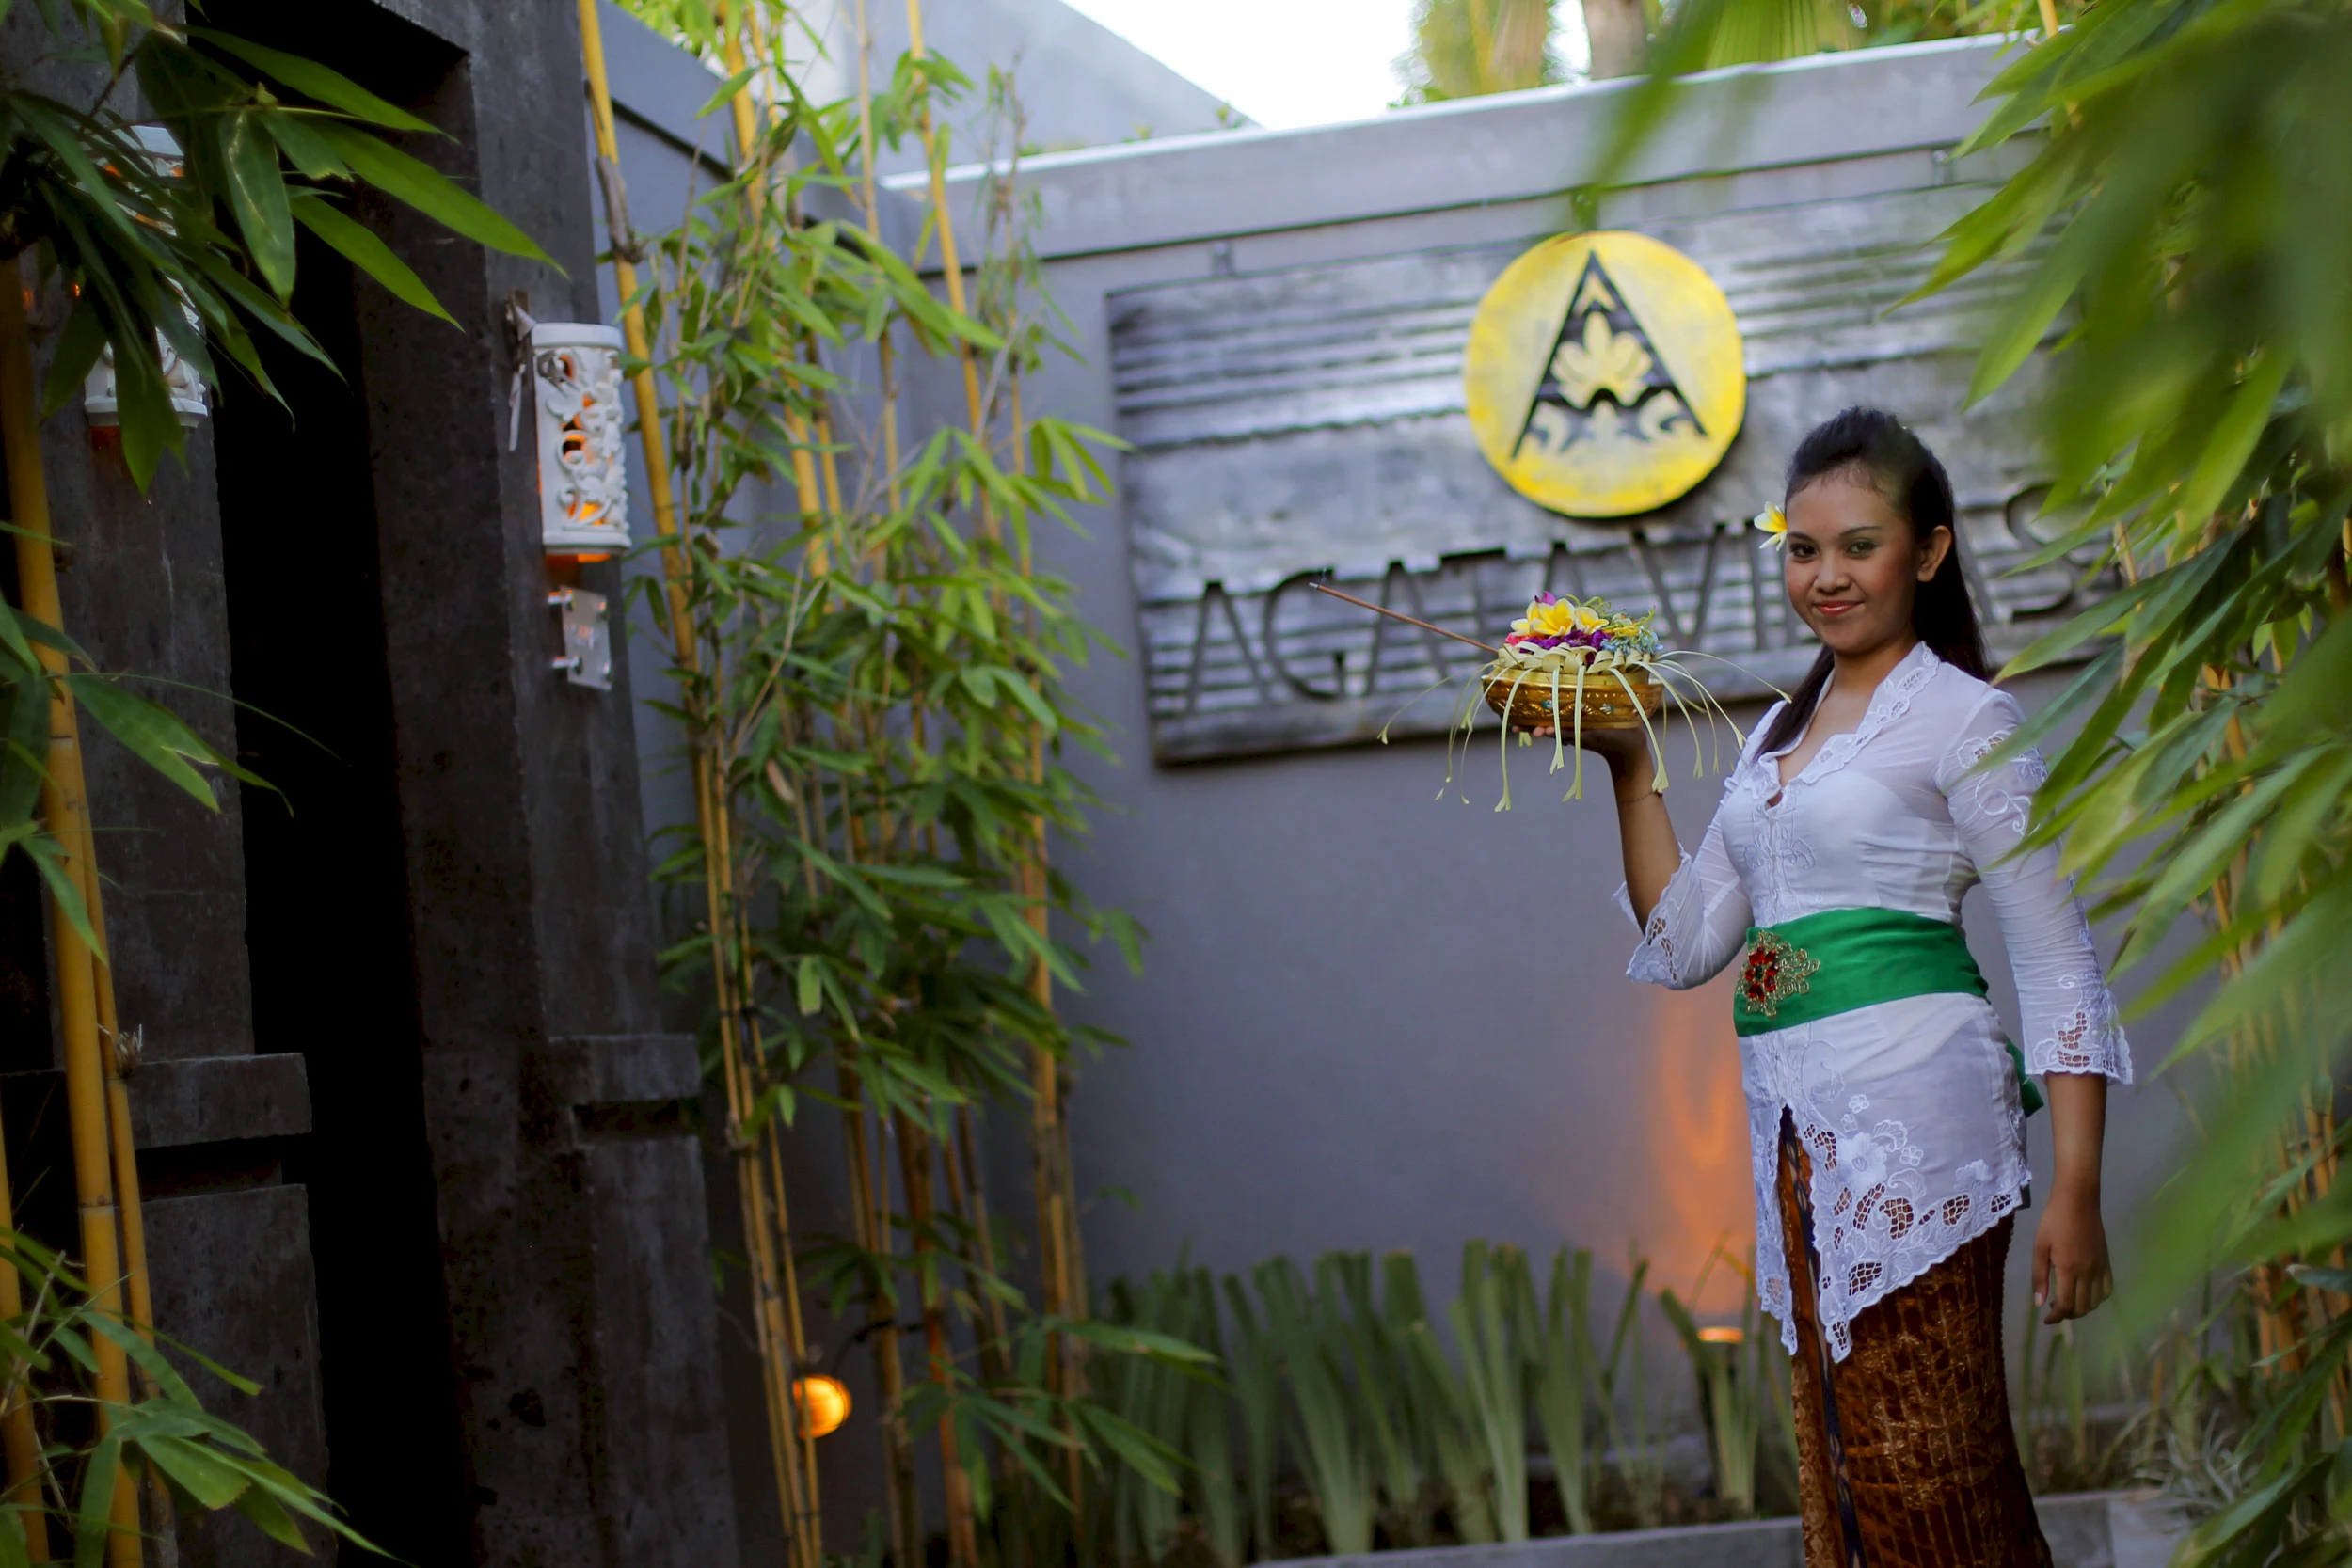 Harmonize synergy environment, society and Bali culture